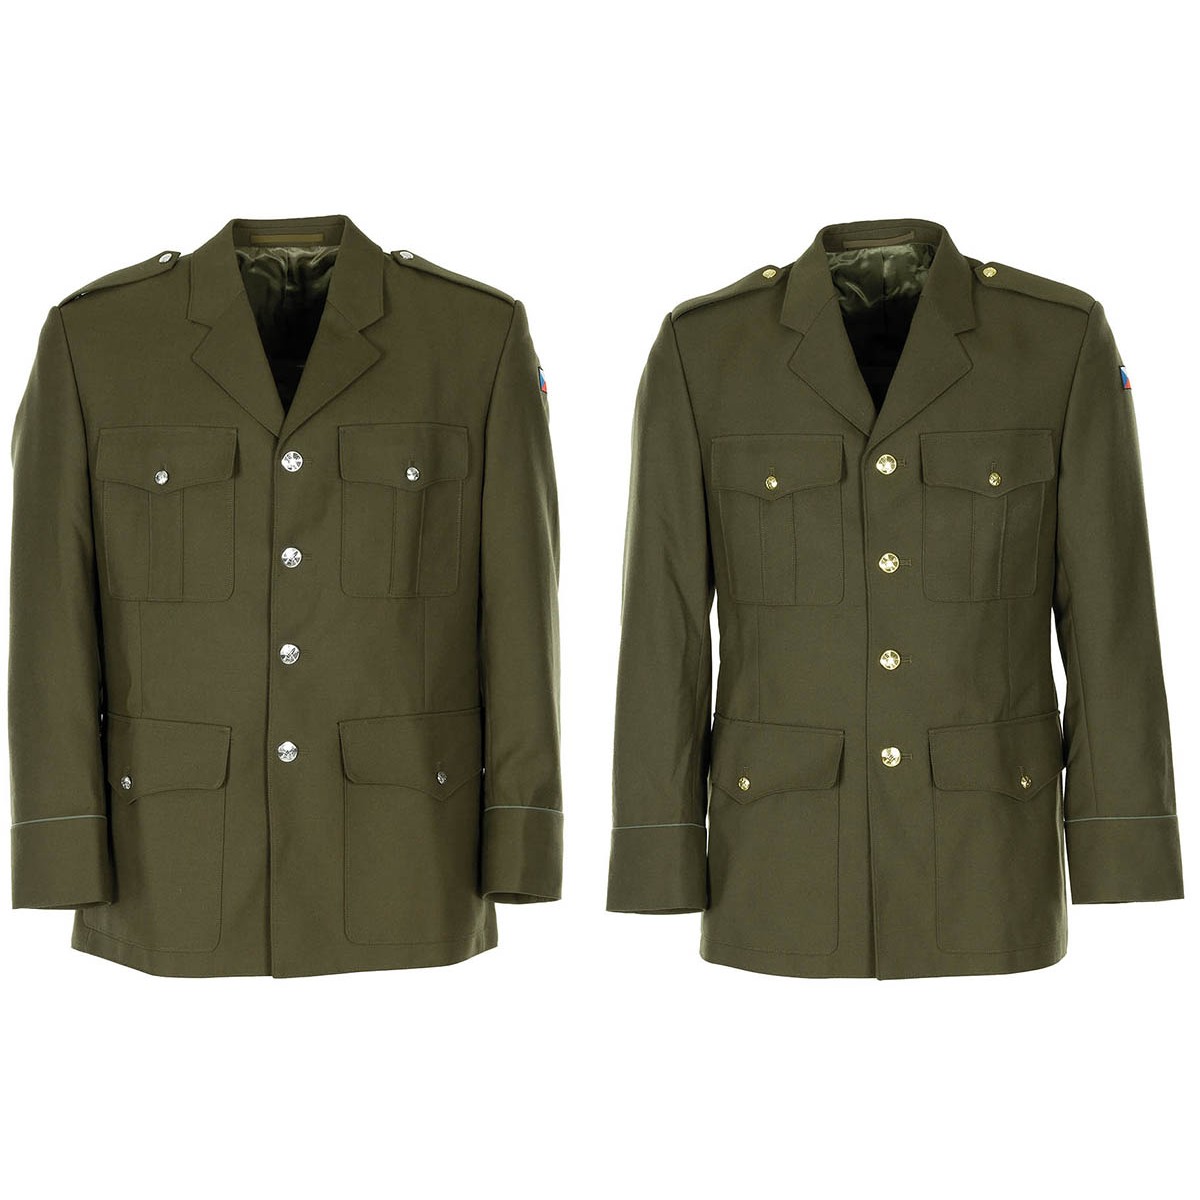 CZ Uniformjacke,  grün, neuwertig (5 Stück)